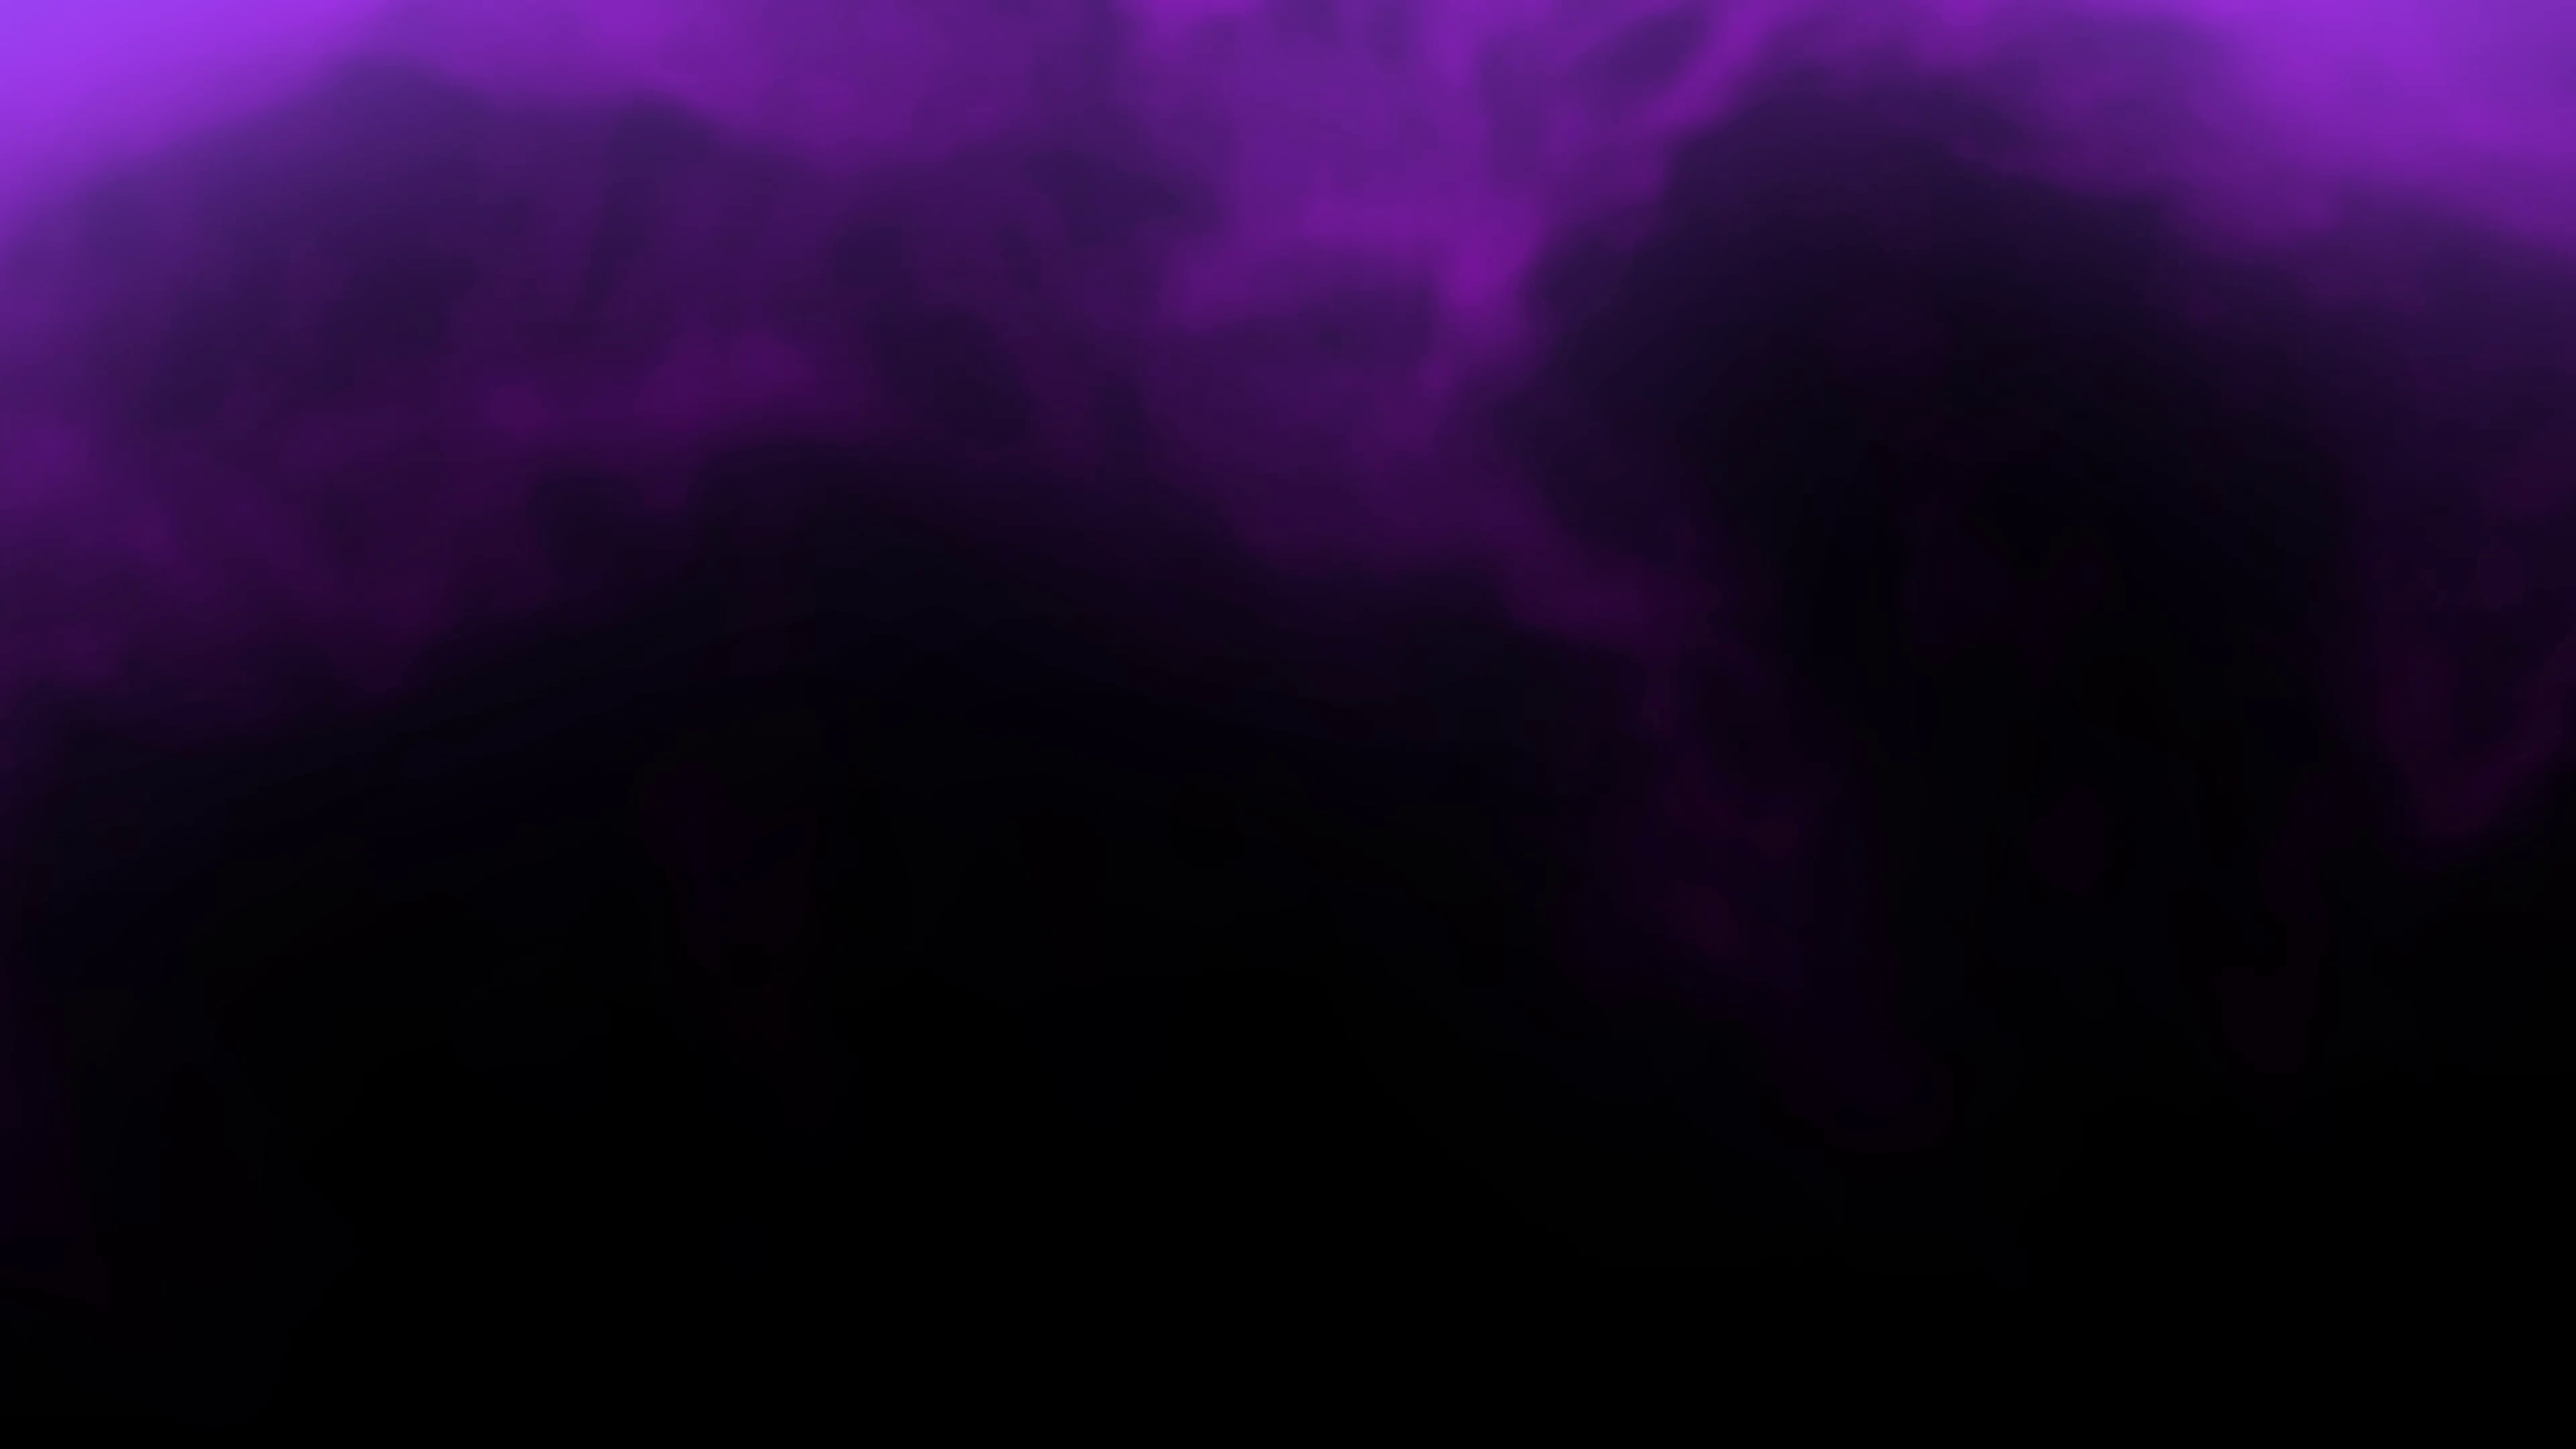 Animated glowing purple smoke or gas descending (falloff) slowly ...